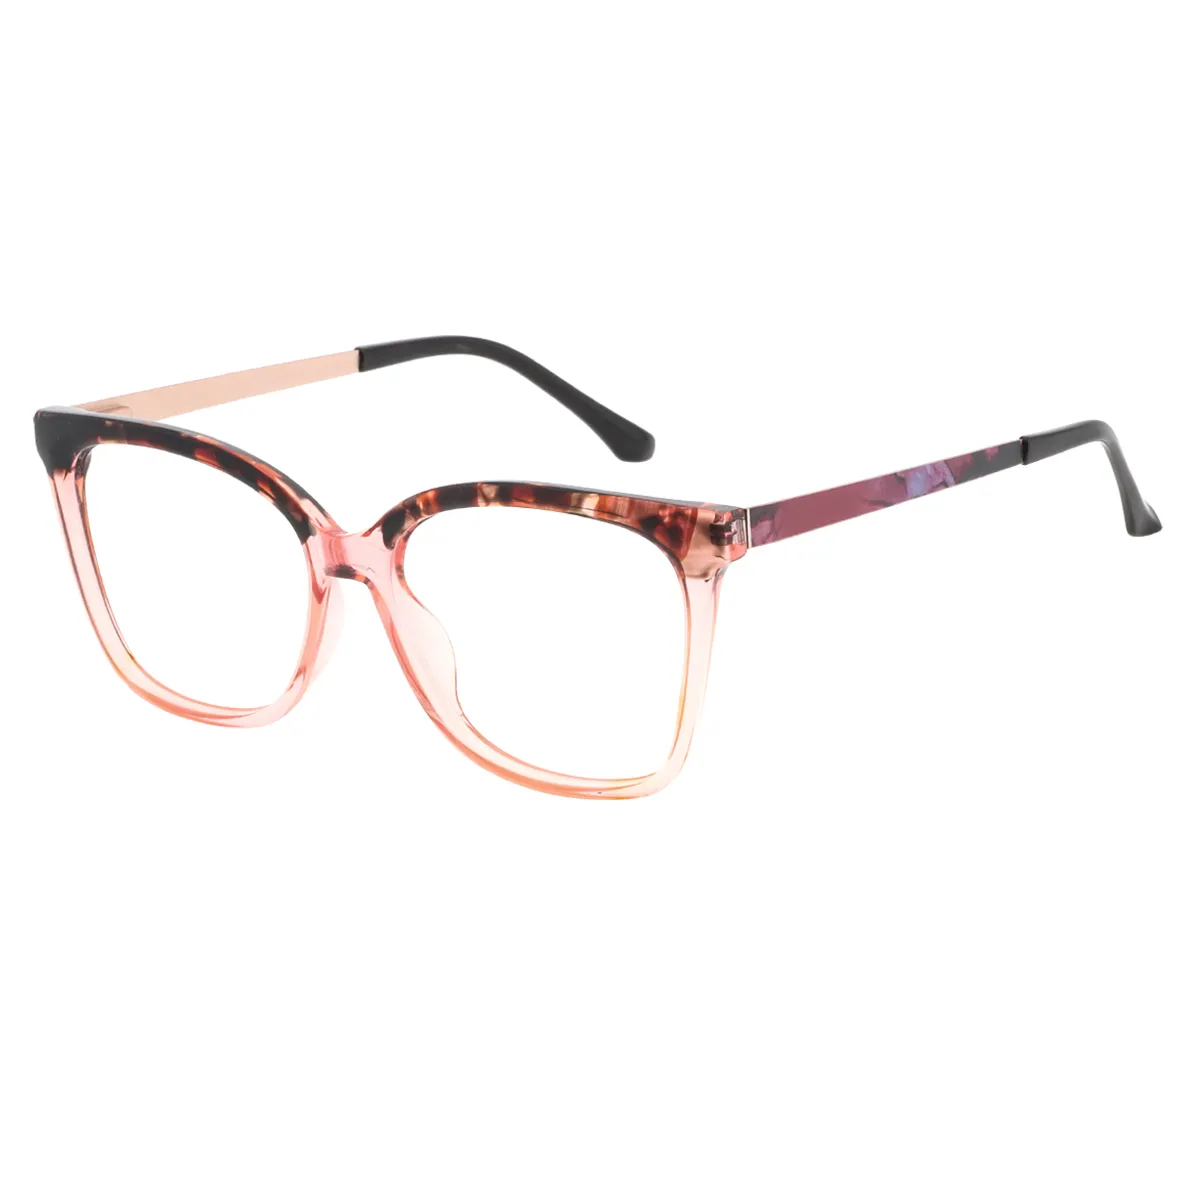 Lana - Square Pink Glasses for Women